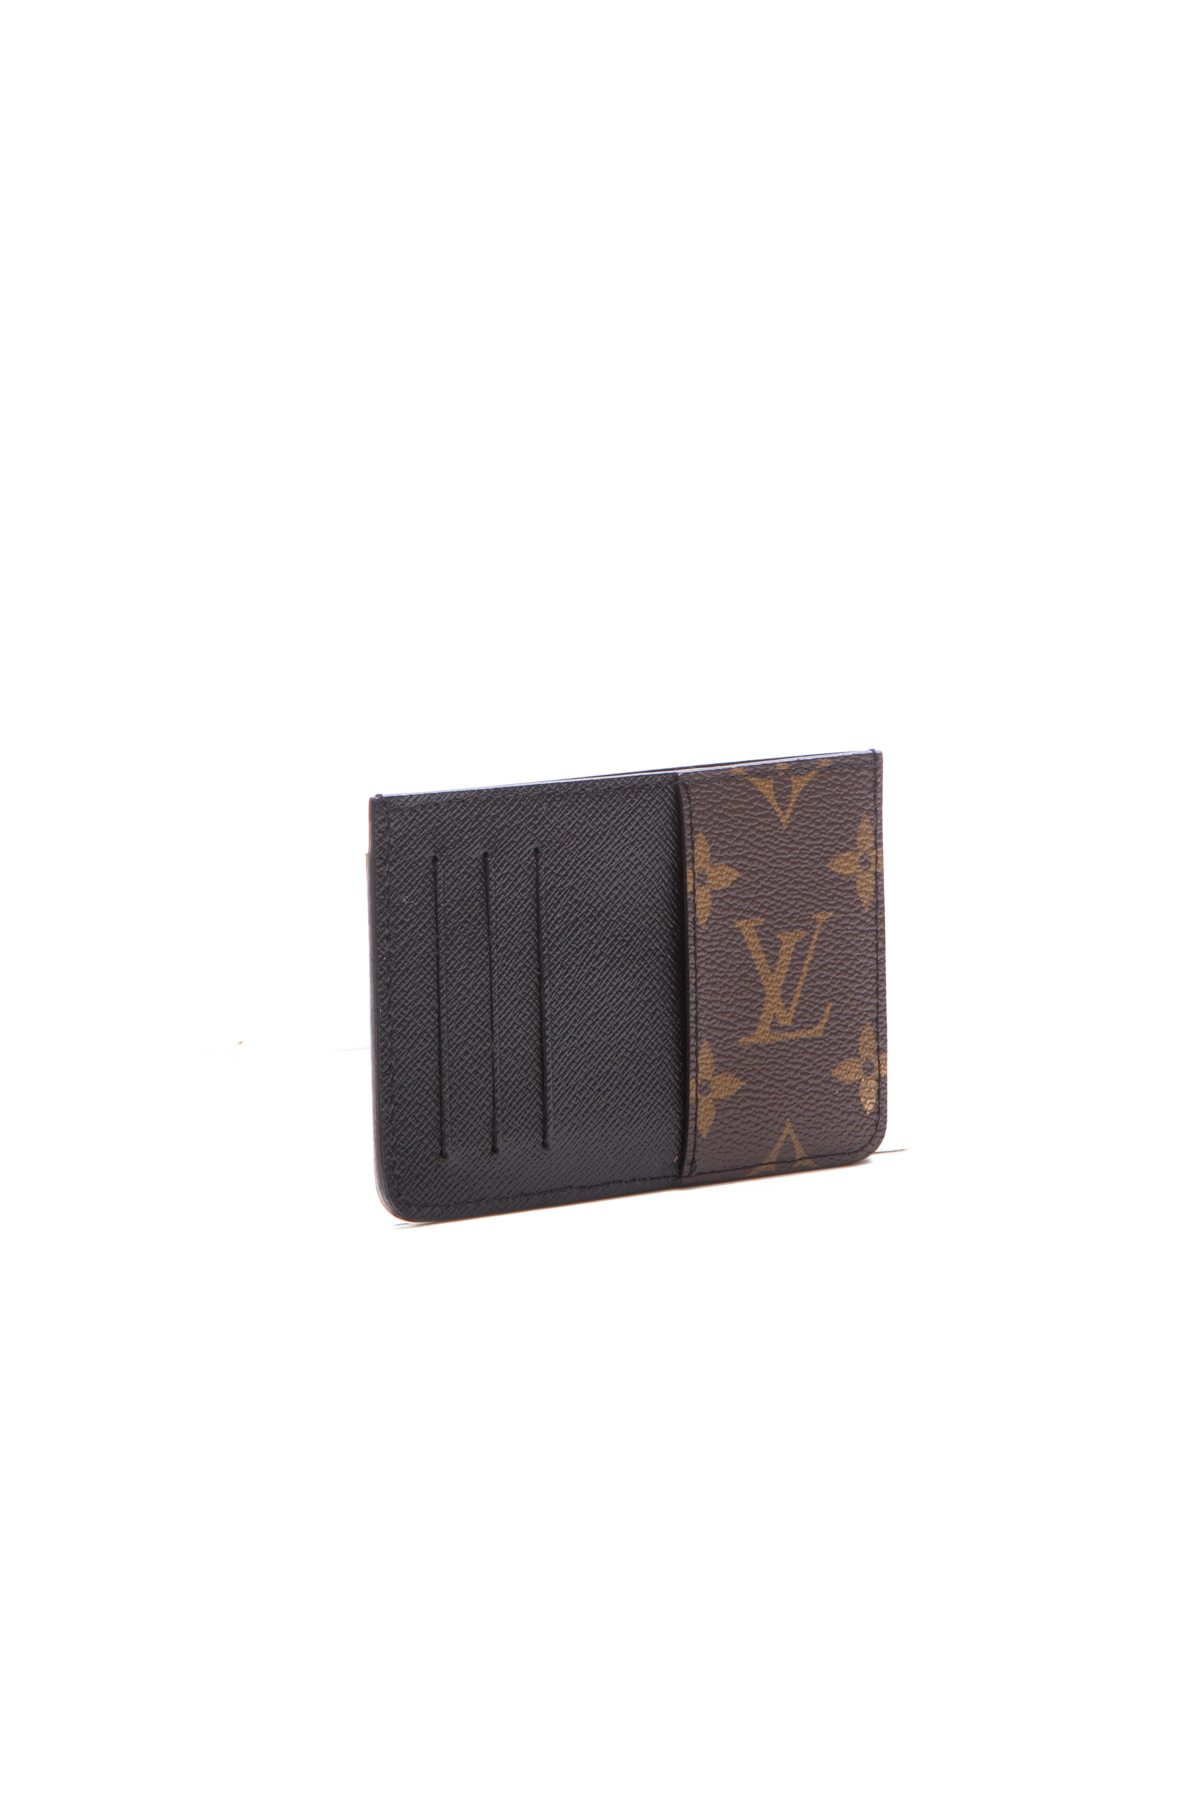 5-YEAR UPDATE!] Louis Vuitton Neo Porte Cartes UPDATED REVIEW! // BEST  Minimal Wallet/Cardholder? 